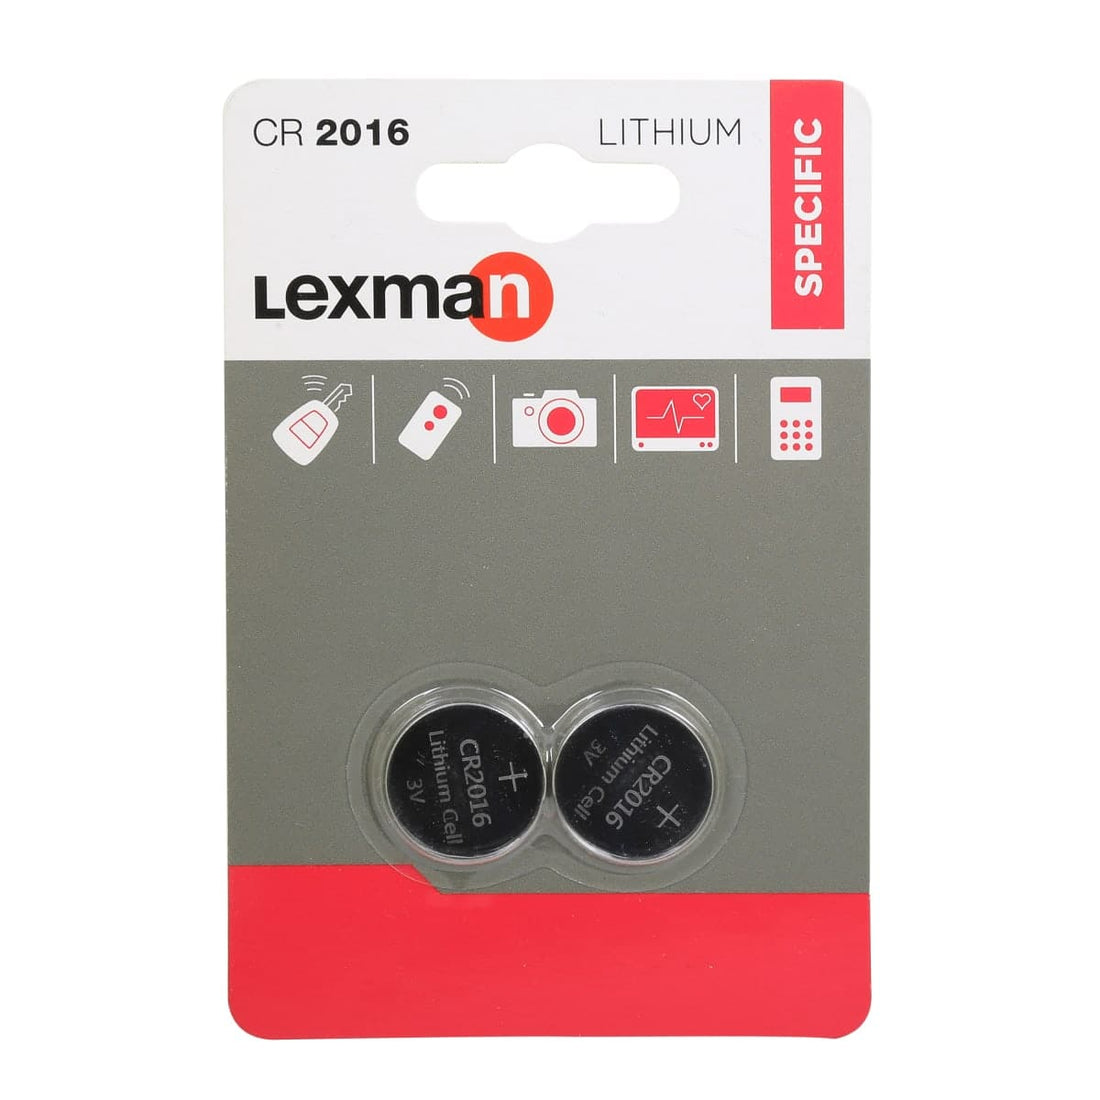 2 CR2016 LITHIUM LEXMAN BATTERIES - best price from Maltashopper.com BR420004054